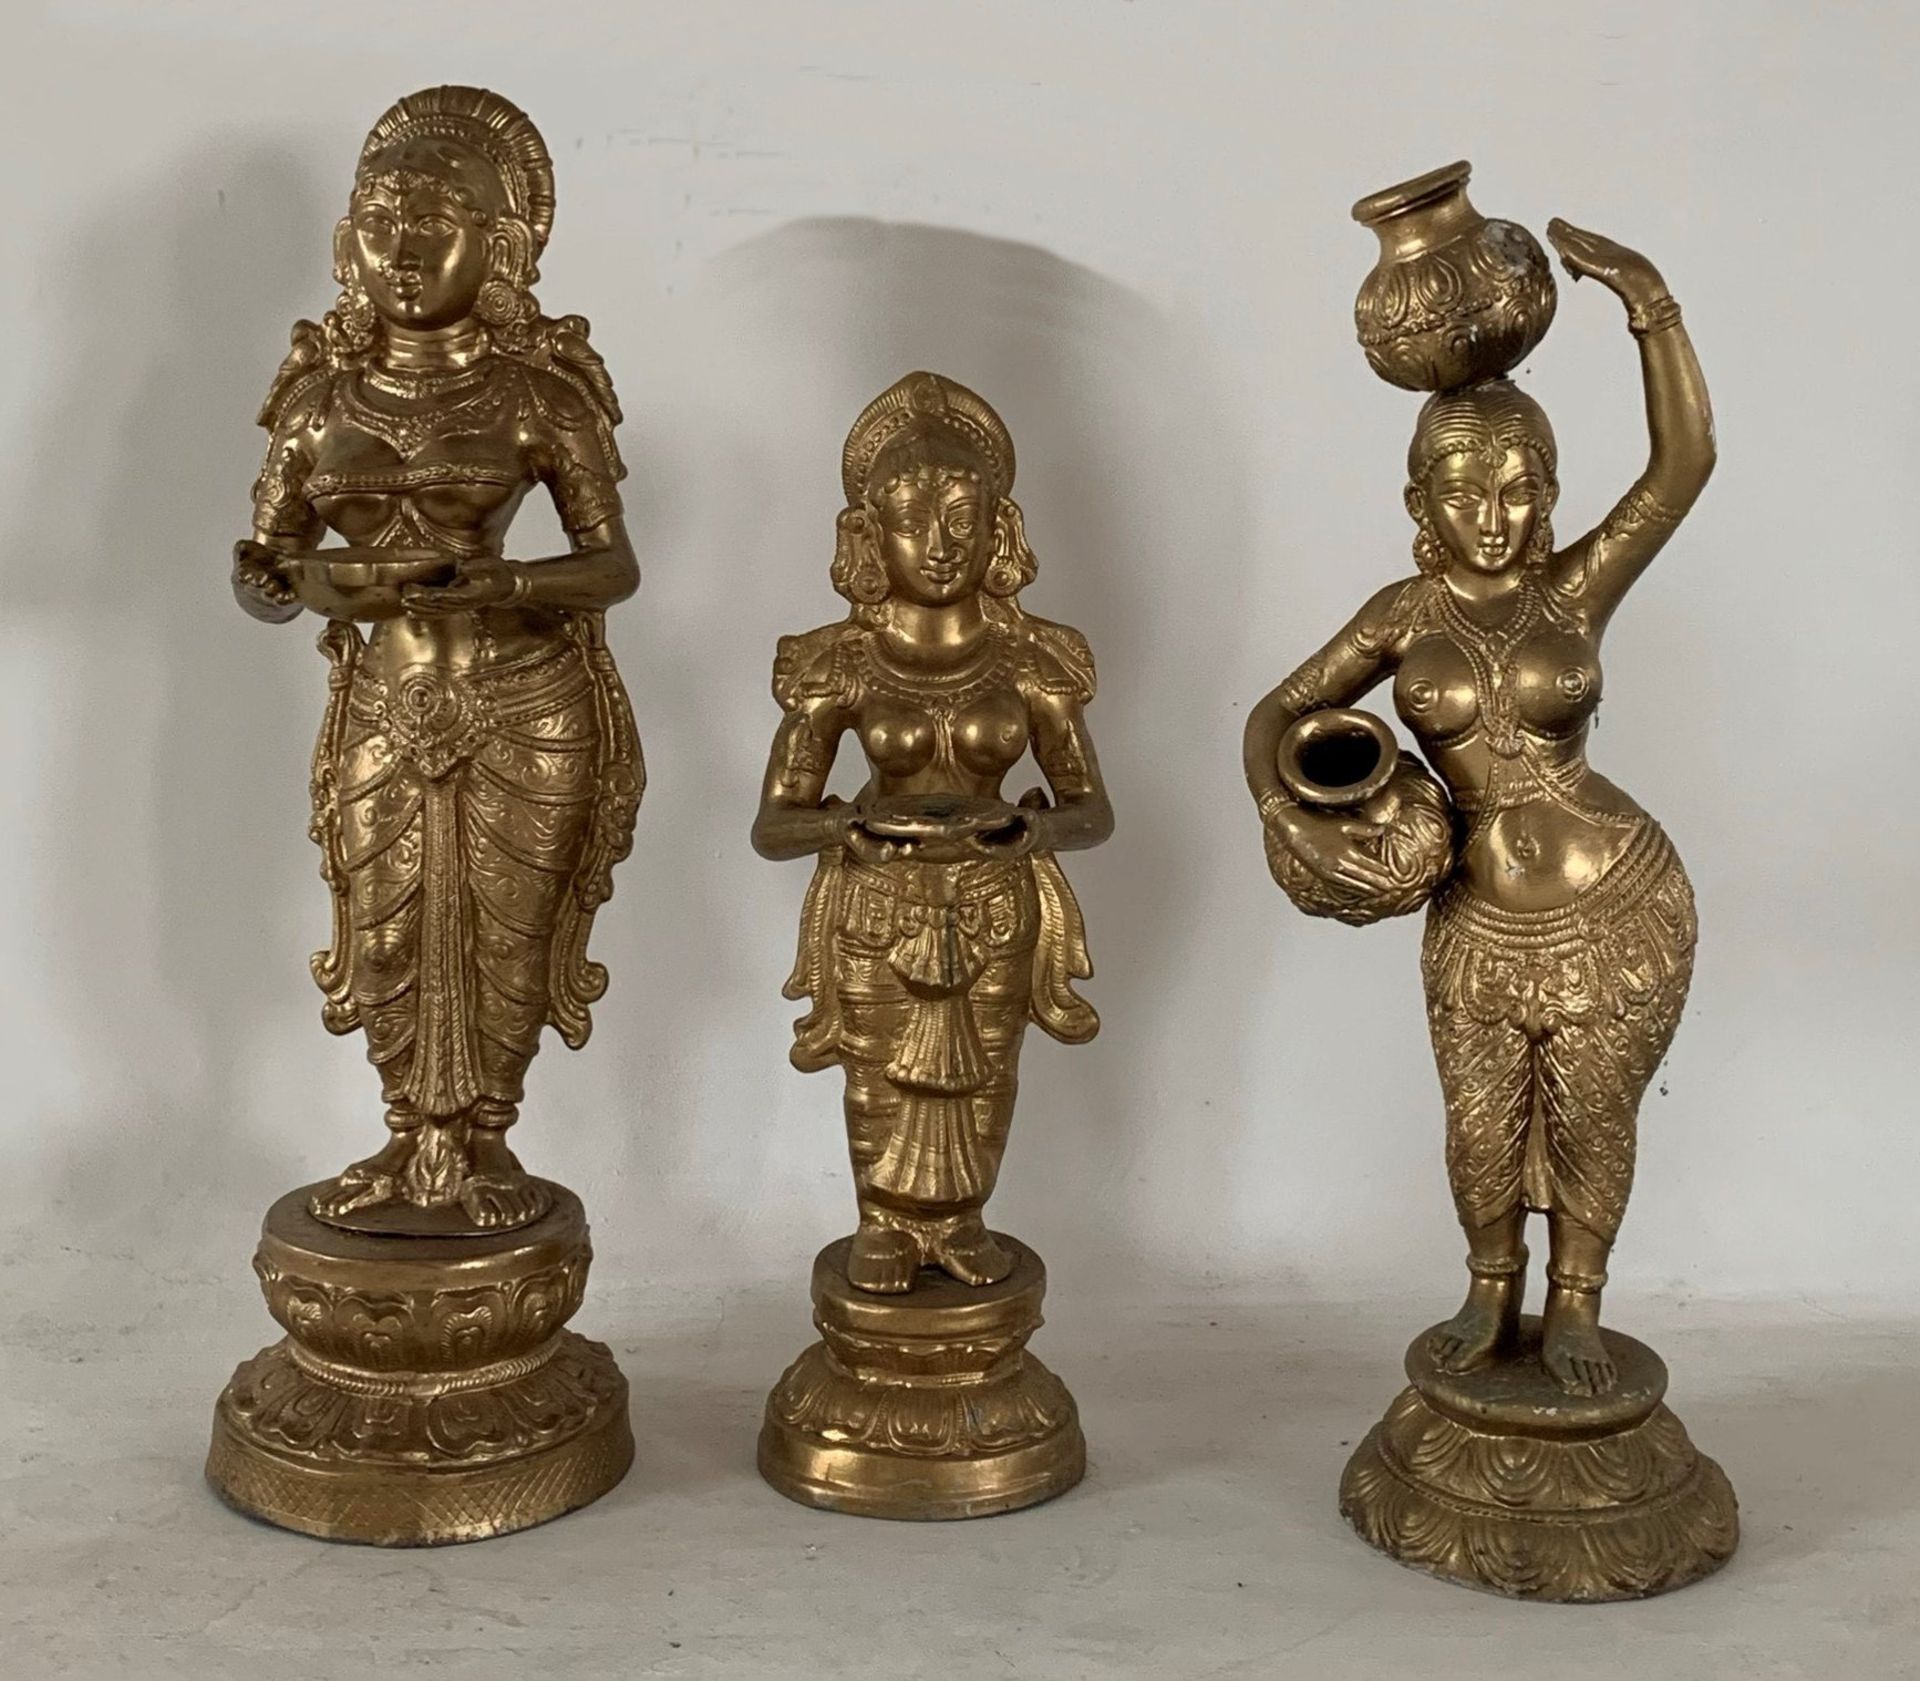 3 x Large Gold Coloured Indian Dolls - Dimensions: 102x40cm, 84x30cm, 97x34cm - Ref: Lot 82 -